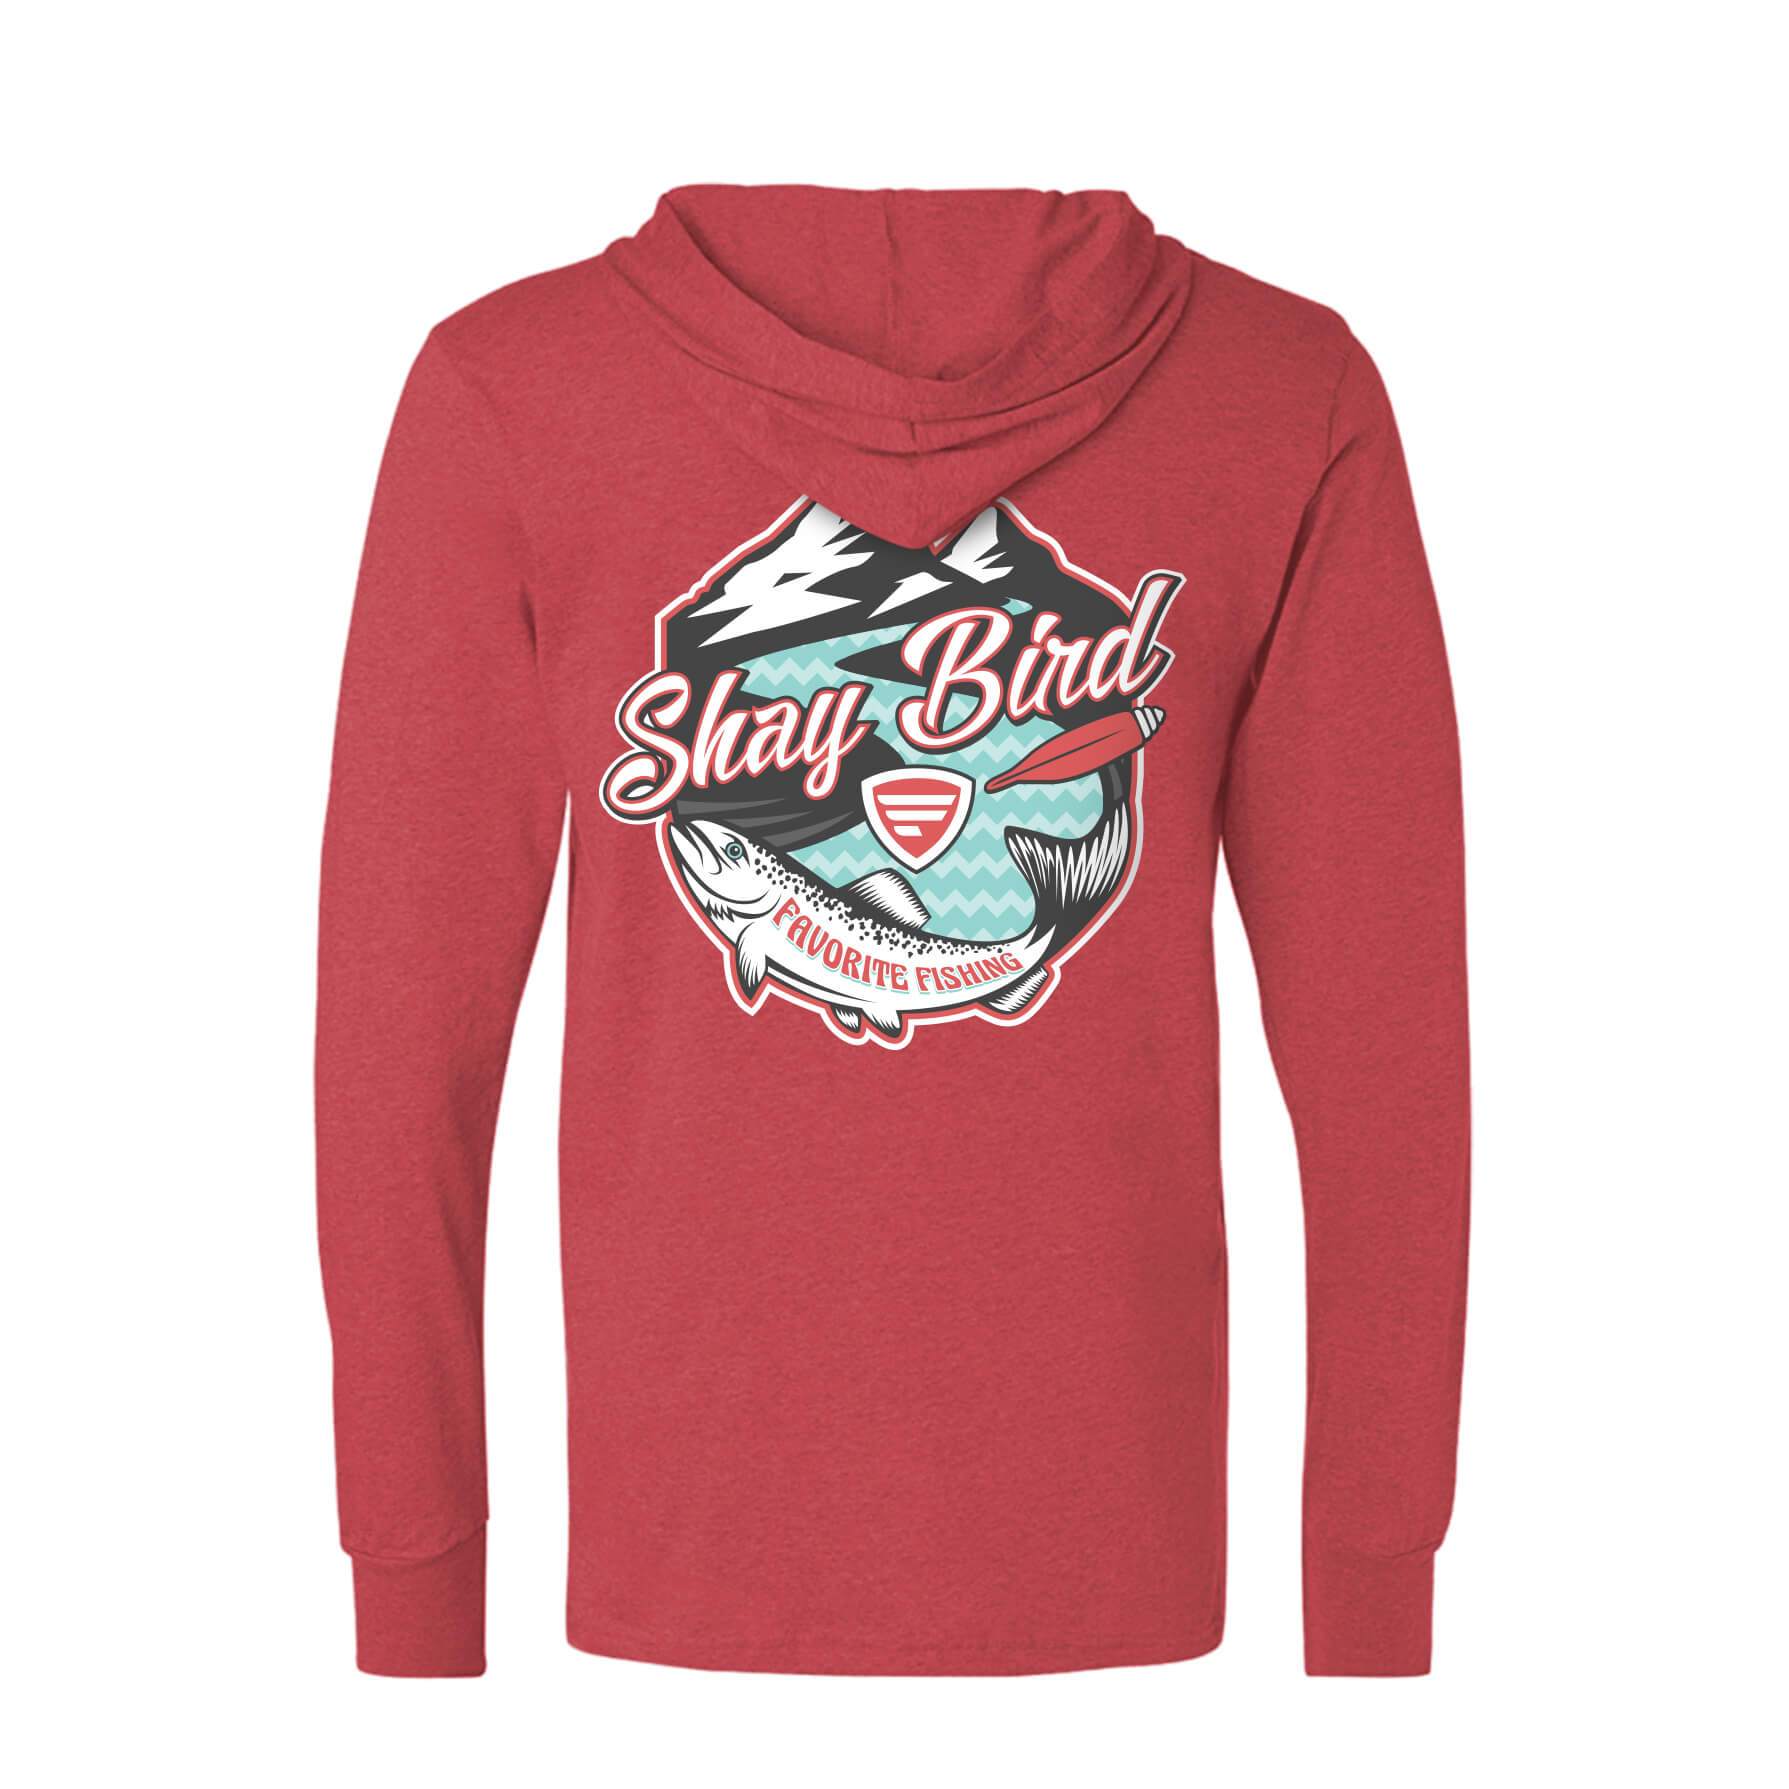 Shay Bird Lightweight Tri-Blend Hoodie | Favorite Fishing XL / Lilac